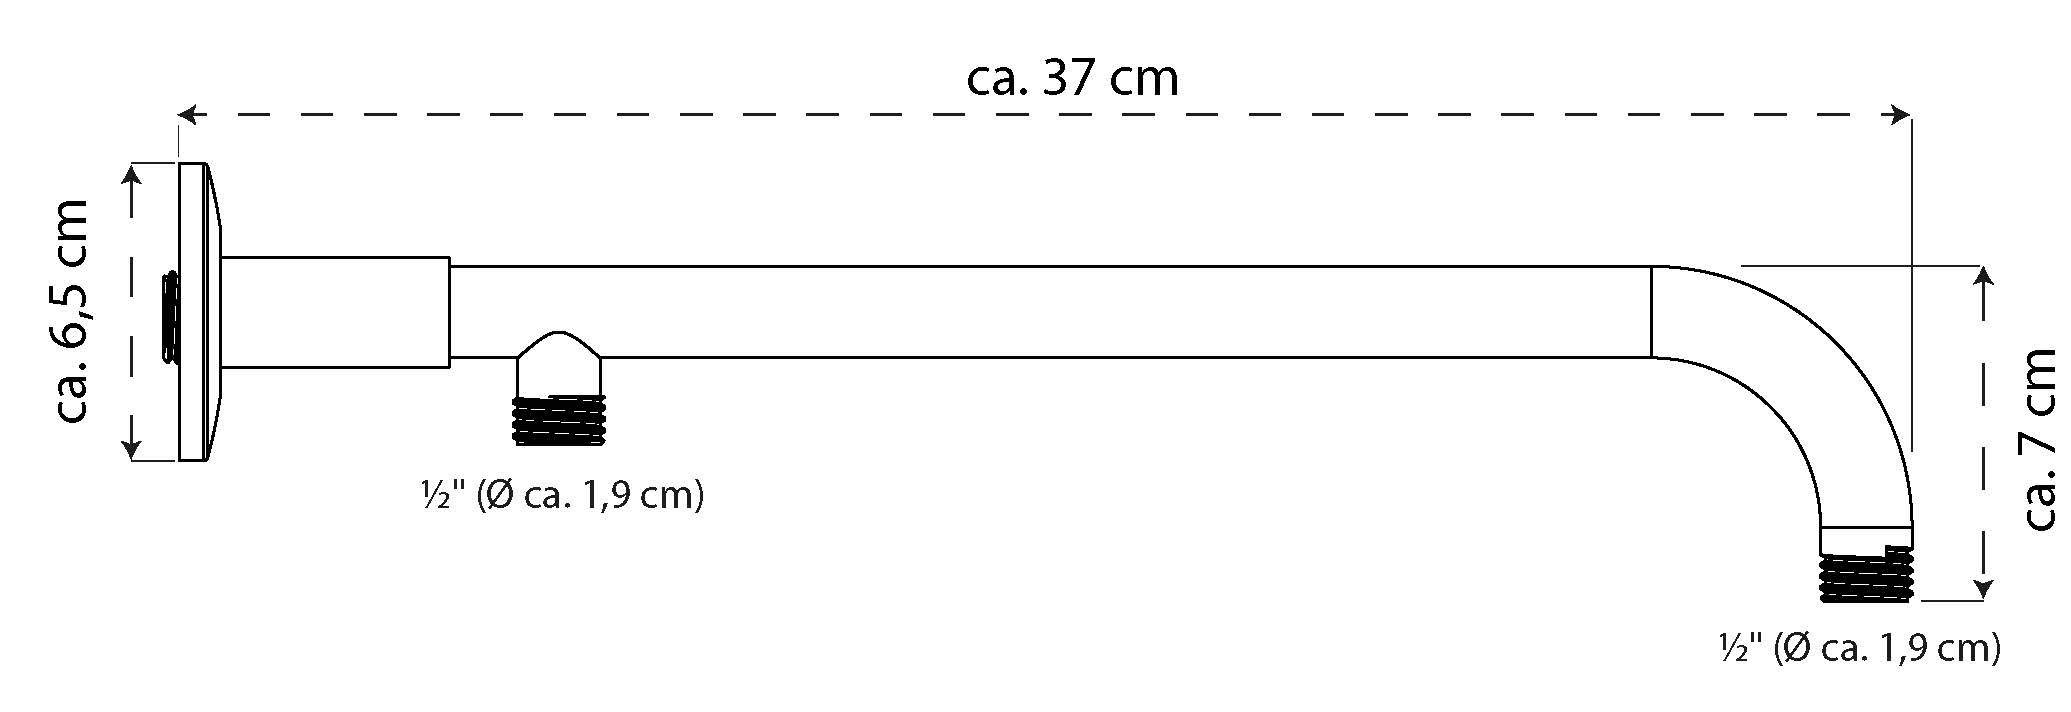 Schütte Wandanschlussbogen, 90 Duschbrause Chrom Unterputz Anschlussbogen 37cm, für °, LYON